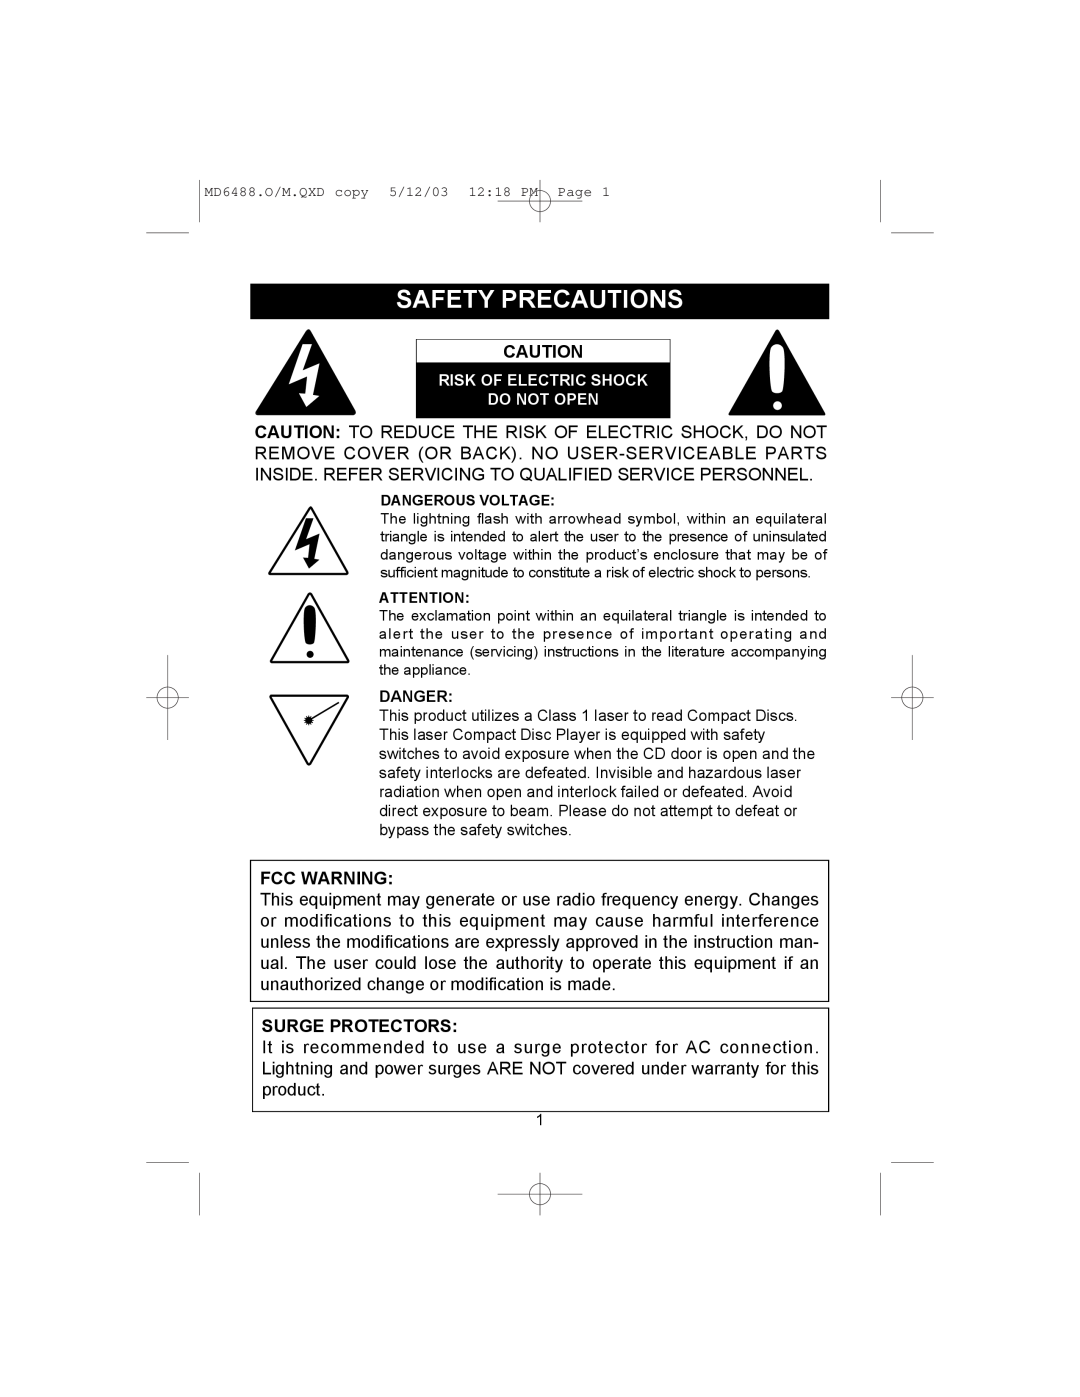 Memorex MD6488 manual Safety Precautions, Fcc Warning, Surge Protectors 